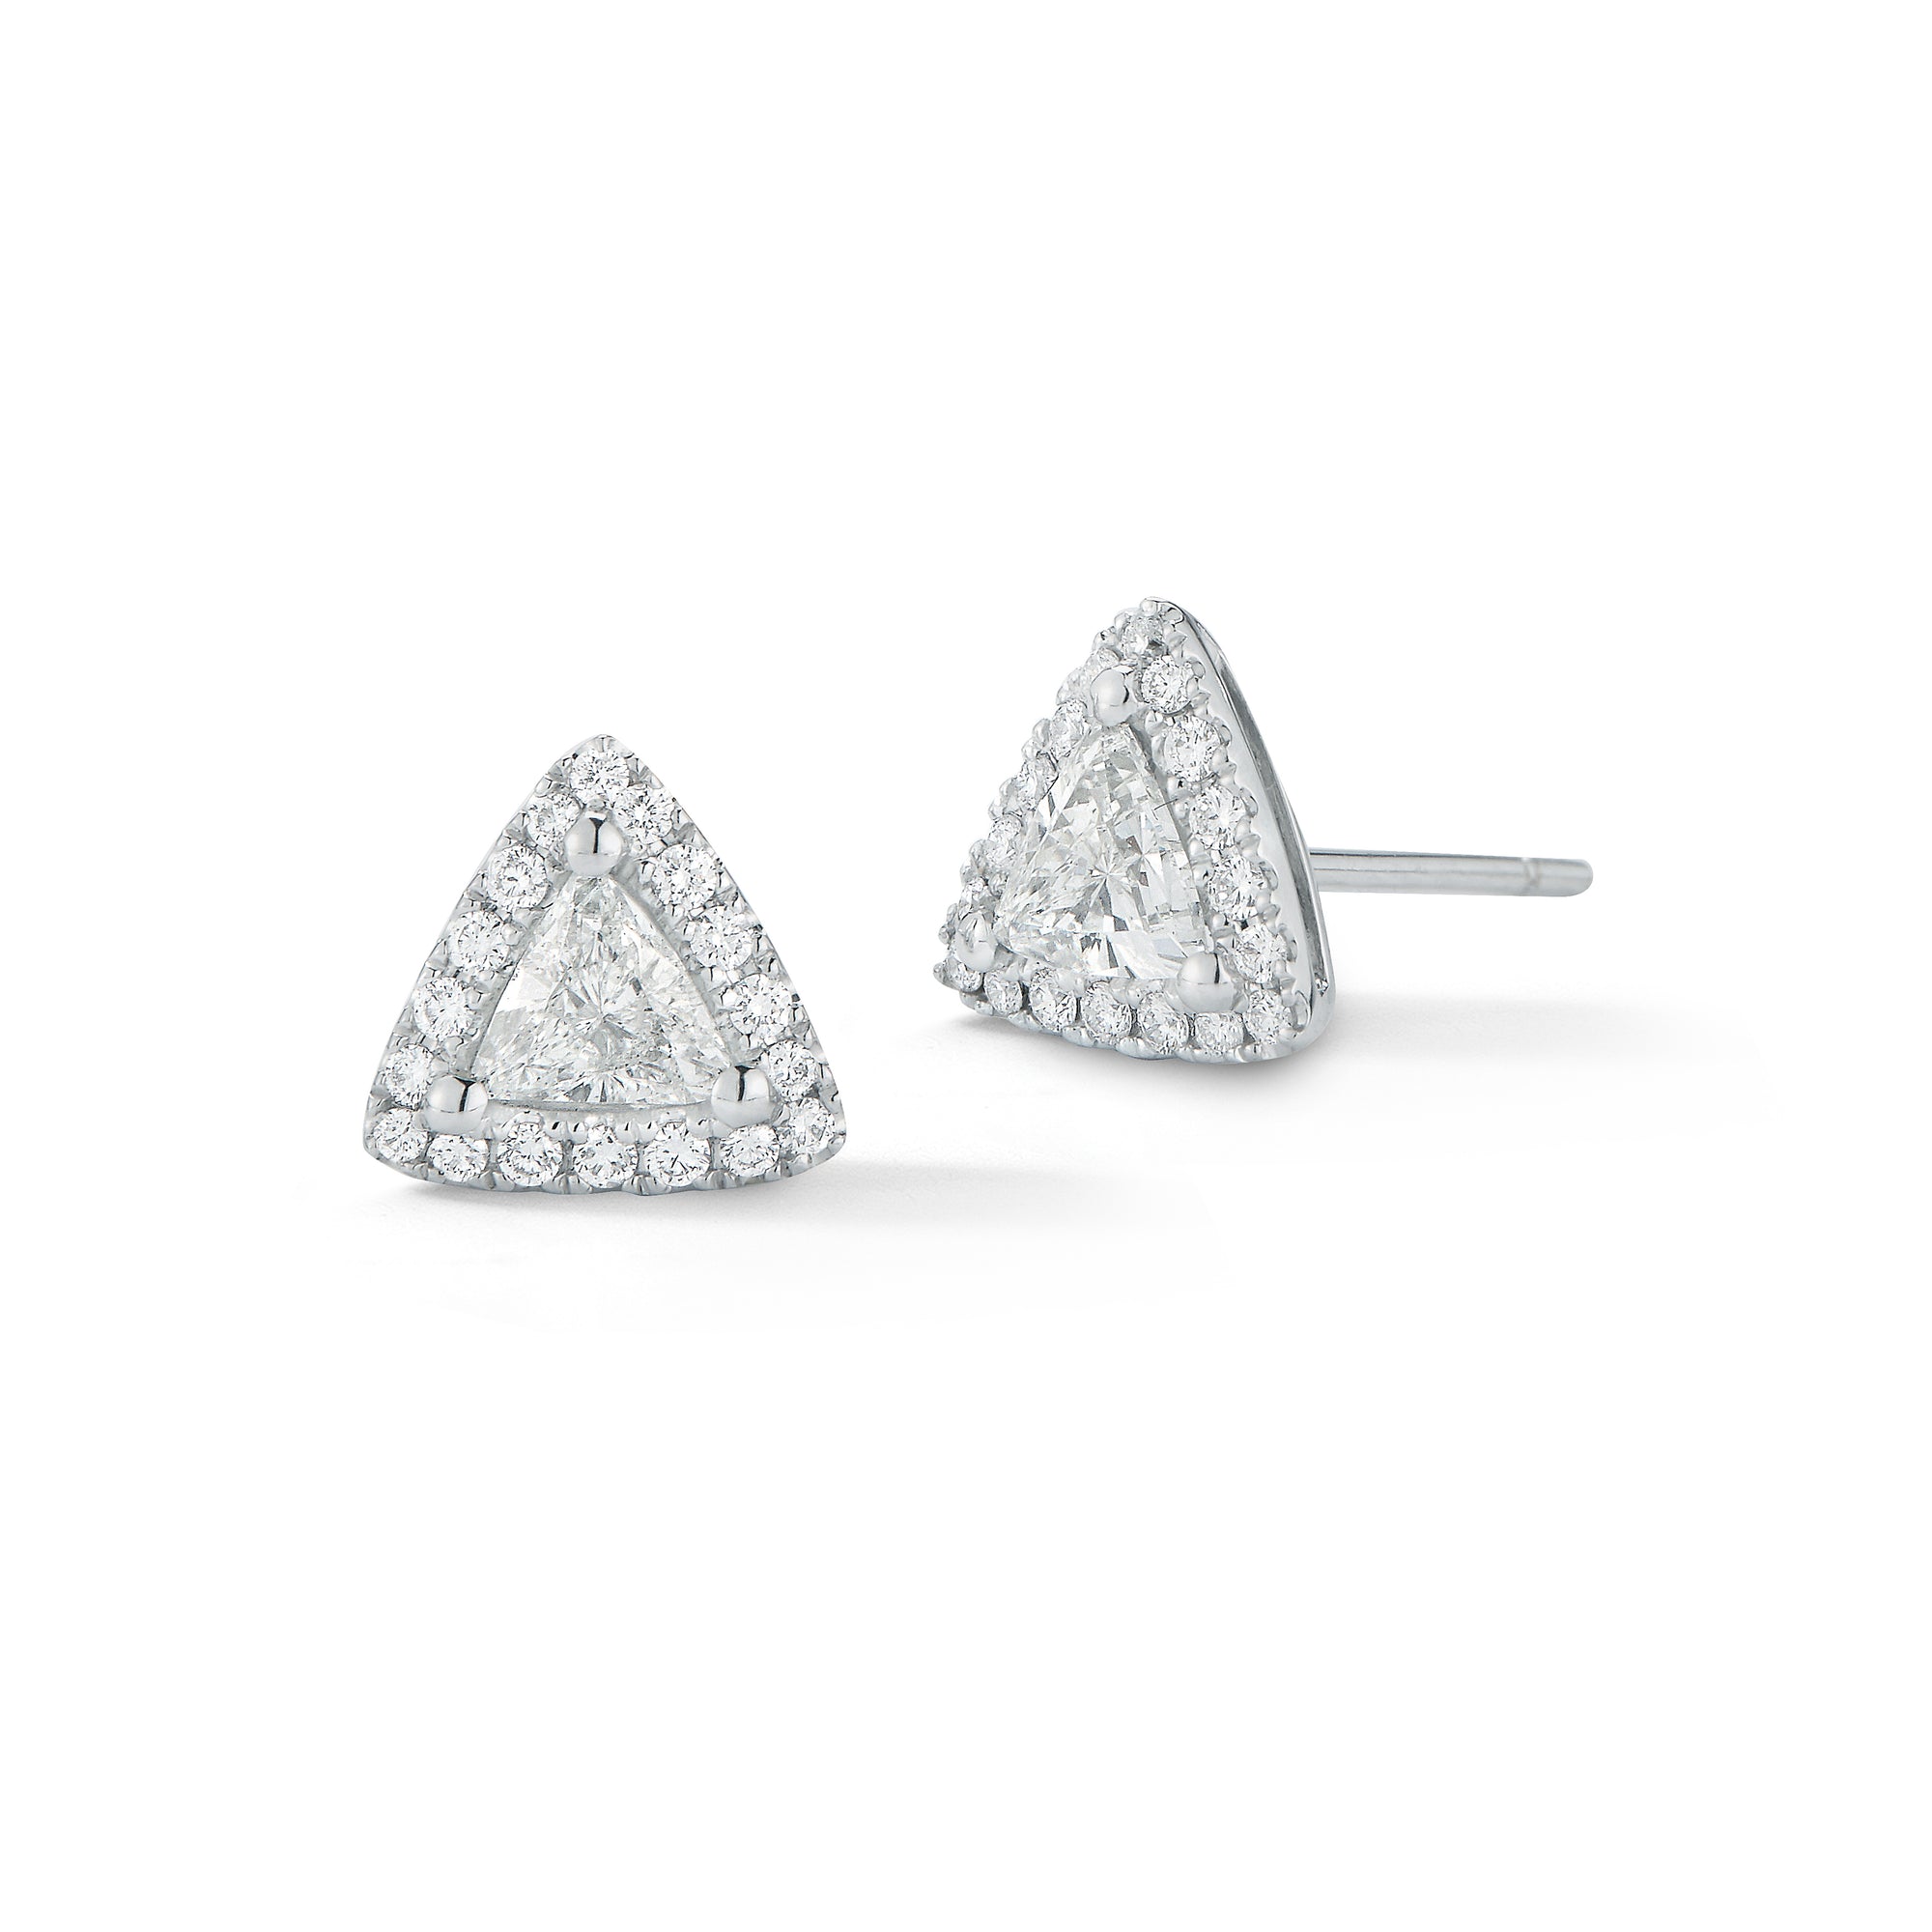 triangle-shaped diamond earrings 18k gold, 2.61 grams, 36 round shared prong-set diamonds .20 carats, 2 triangle prong-set brilliant diamonds .59 carats.